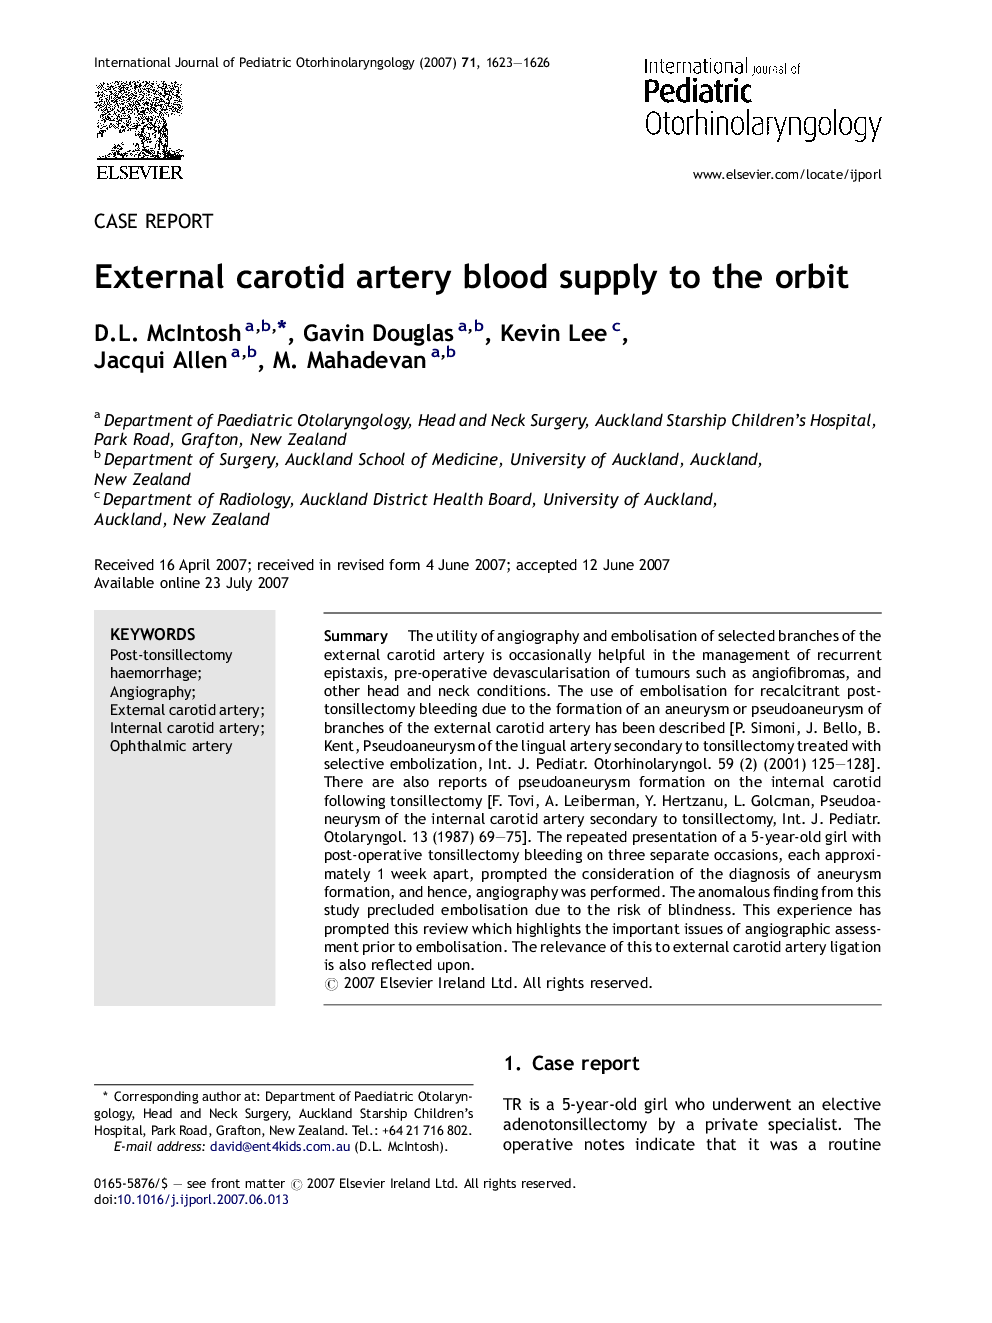 External carotid artery blood supply to the orbit